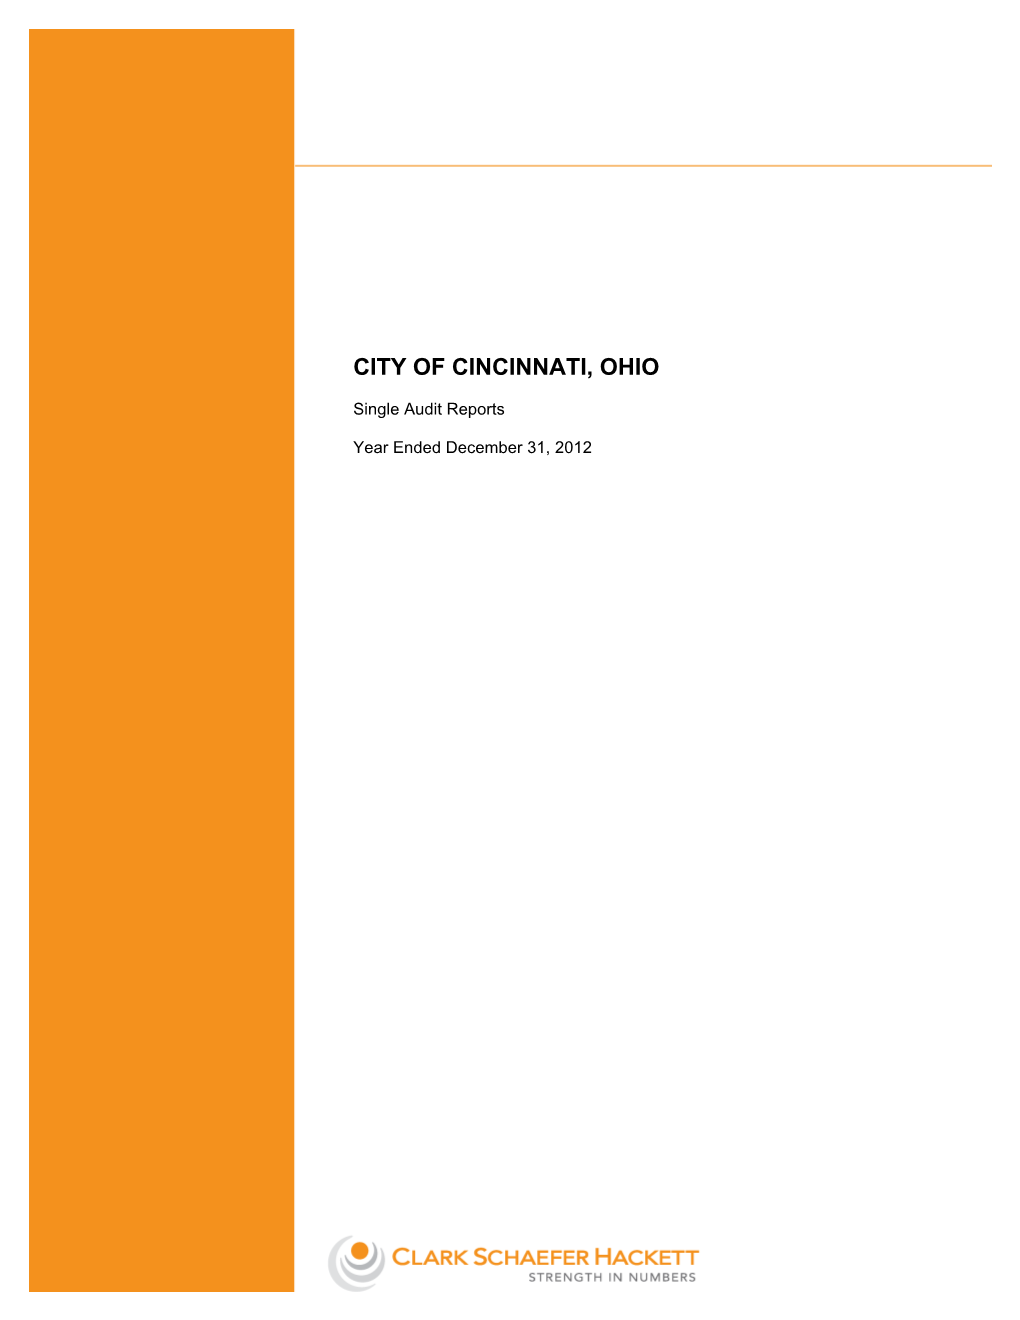 City of Cincinnati, Ohio